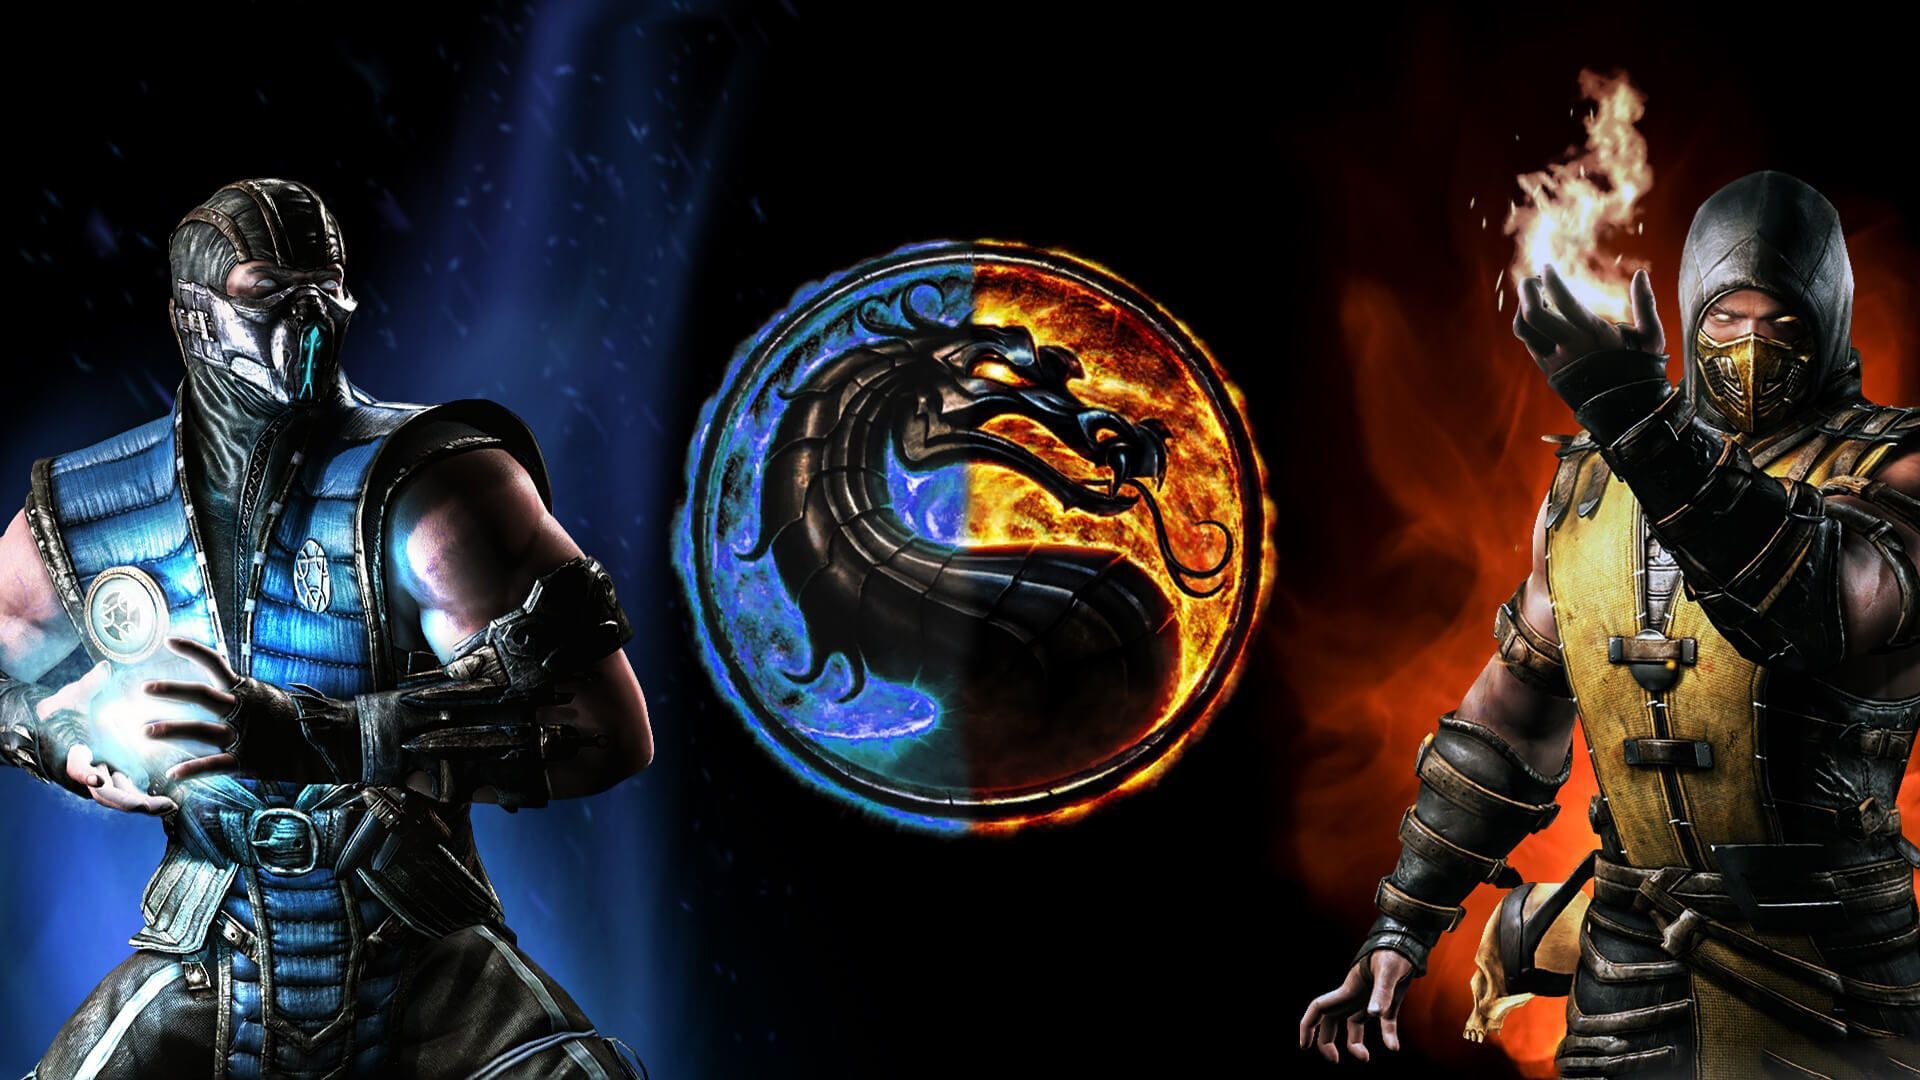 SubZero vs Scorpion in Mortal Kombat X Wallpaper